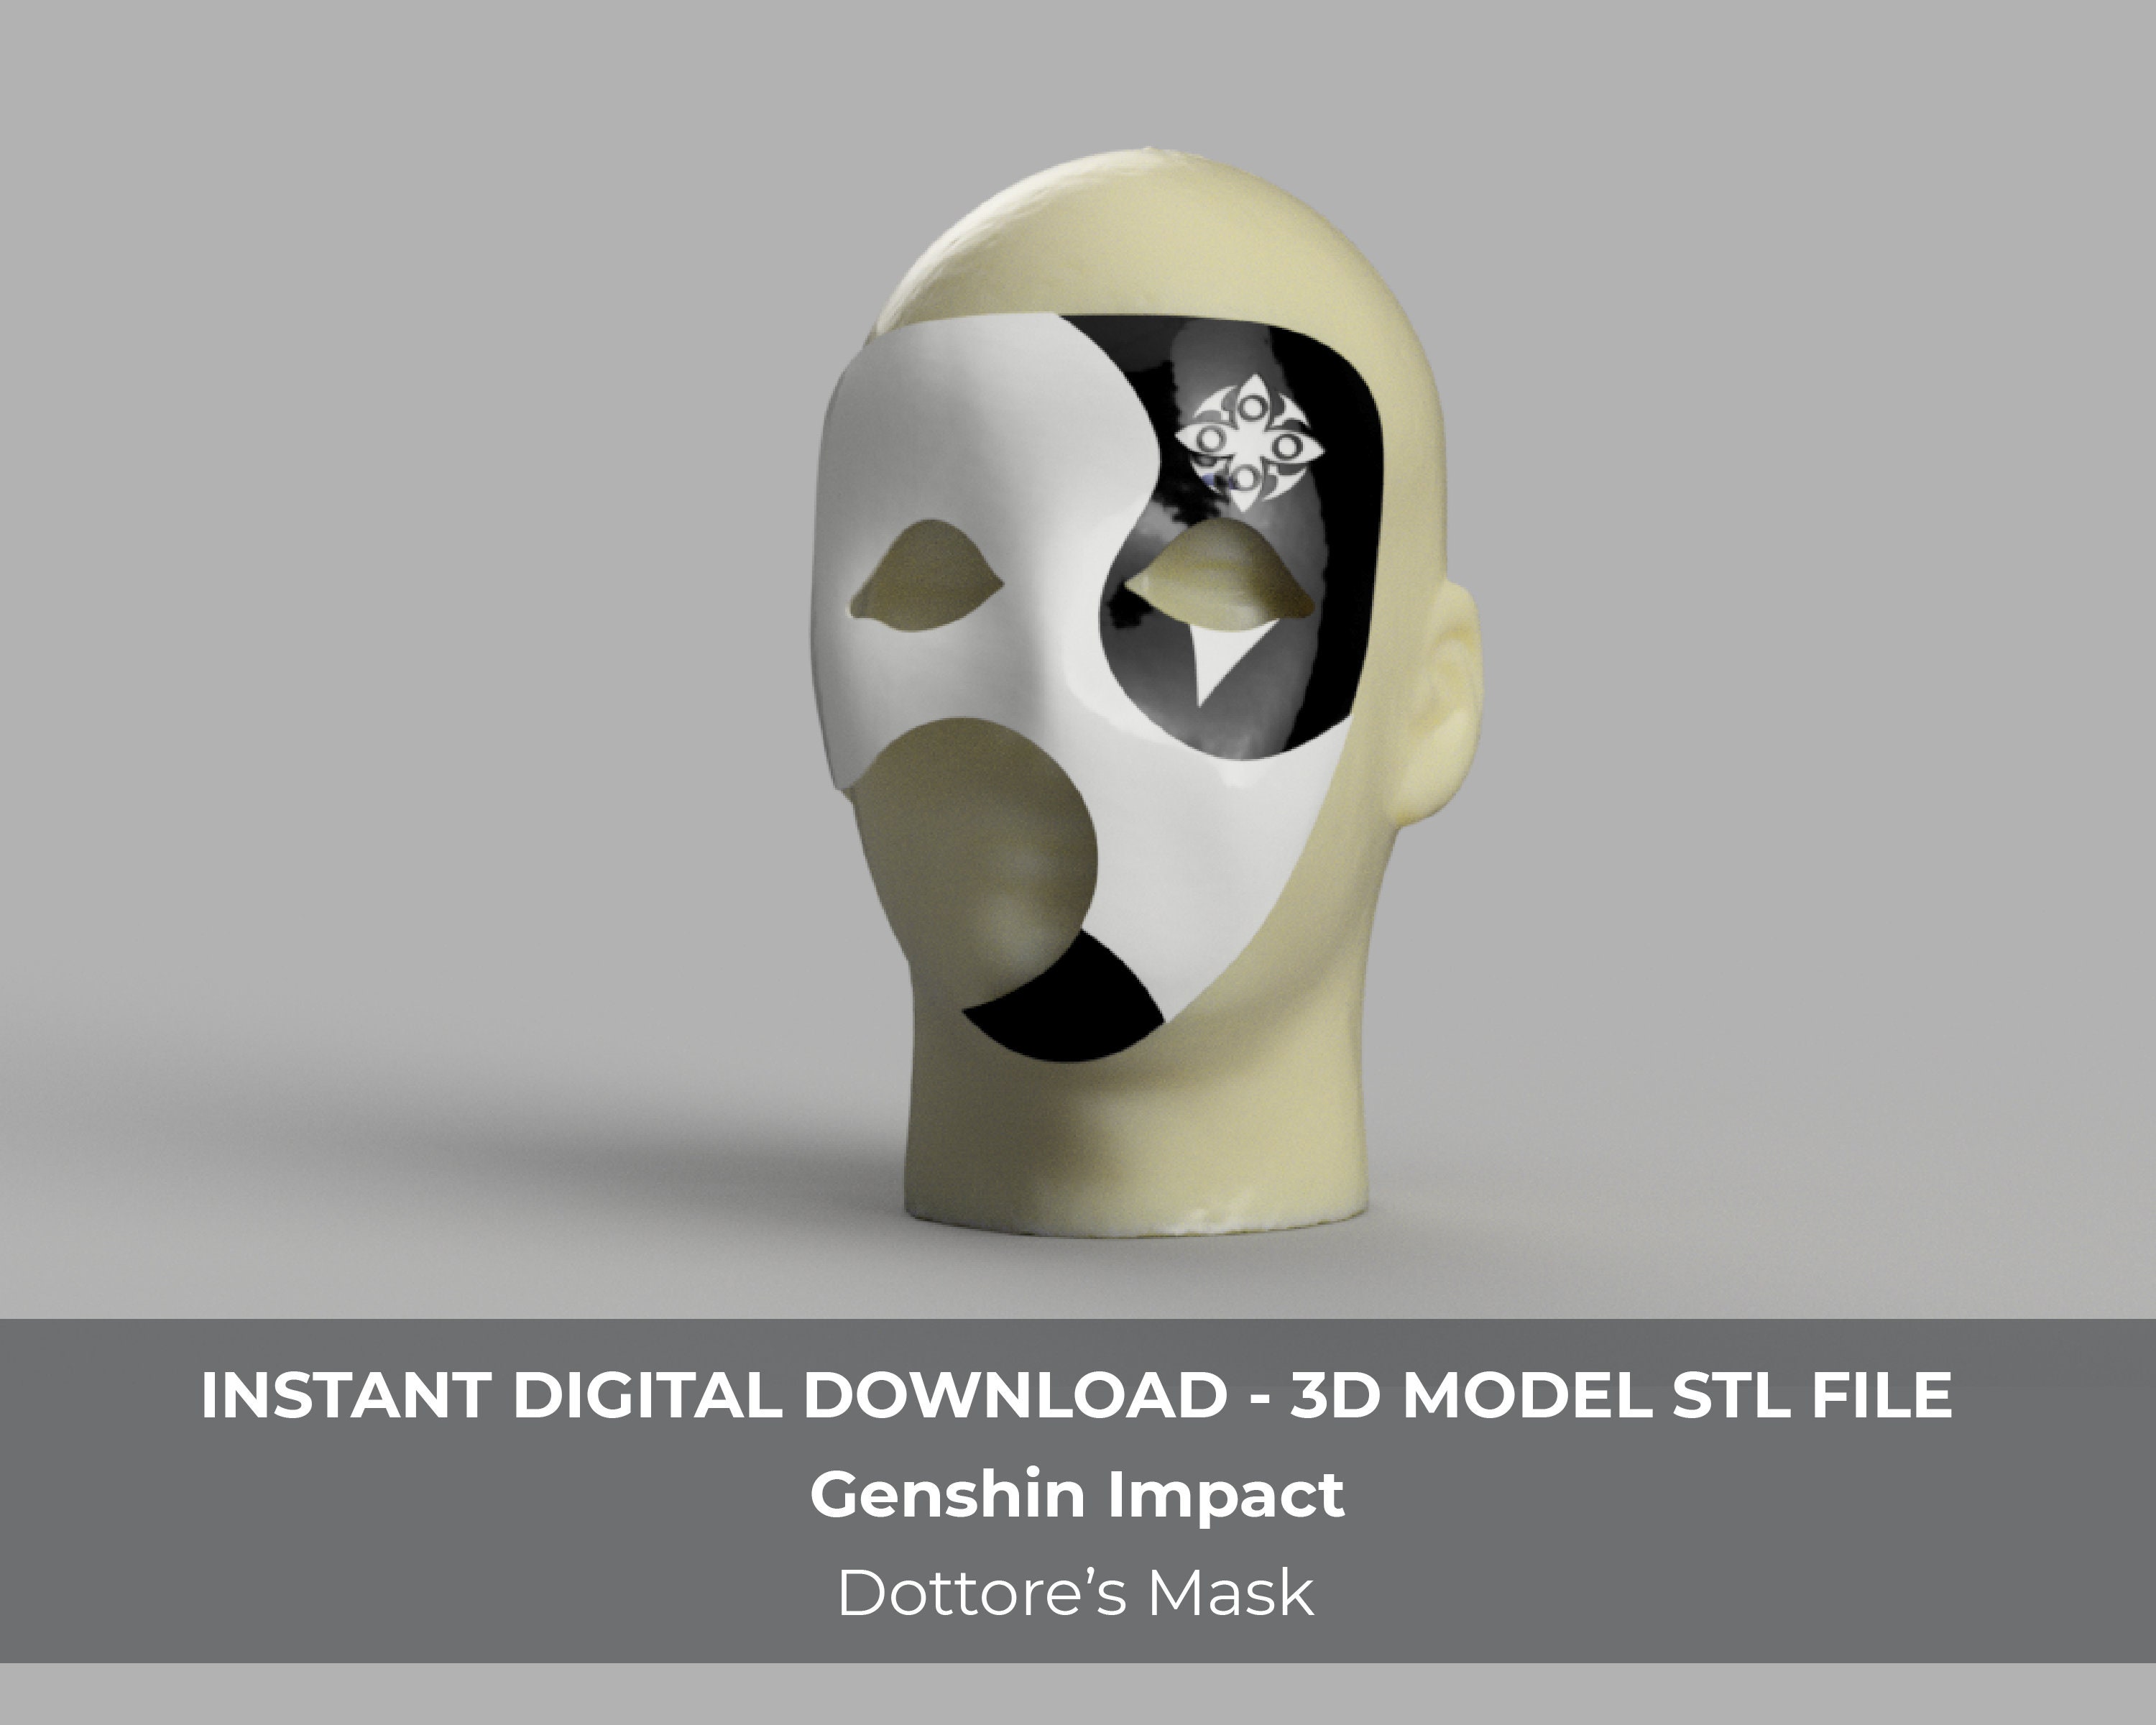 Genshin Impact Il Dottore Mask 3D Model STL File Norway